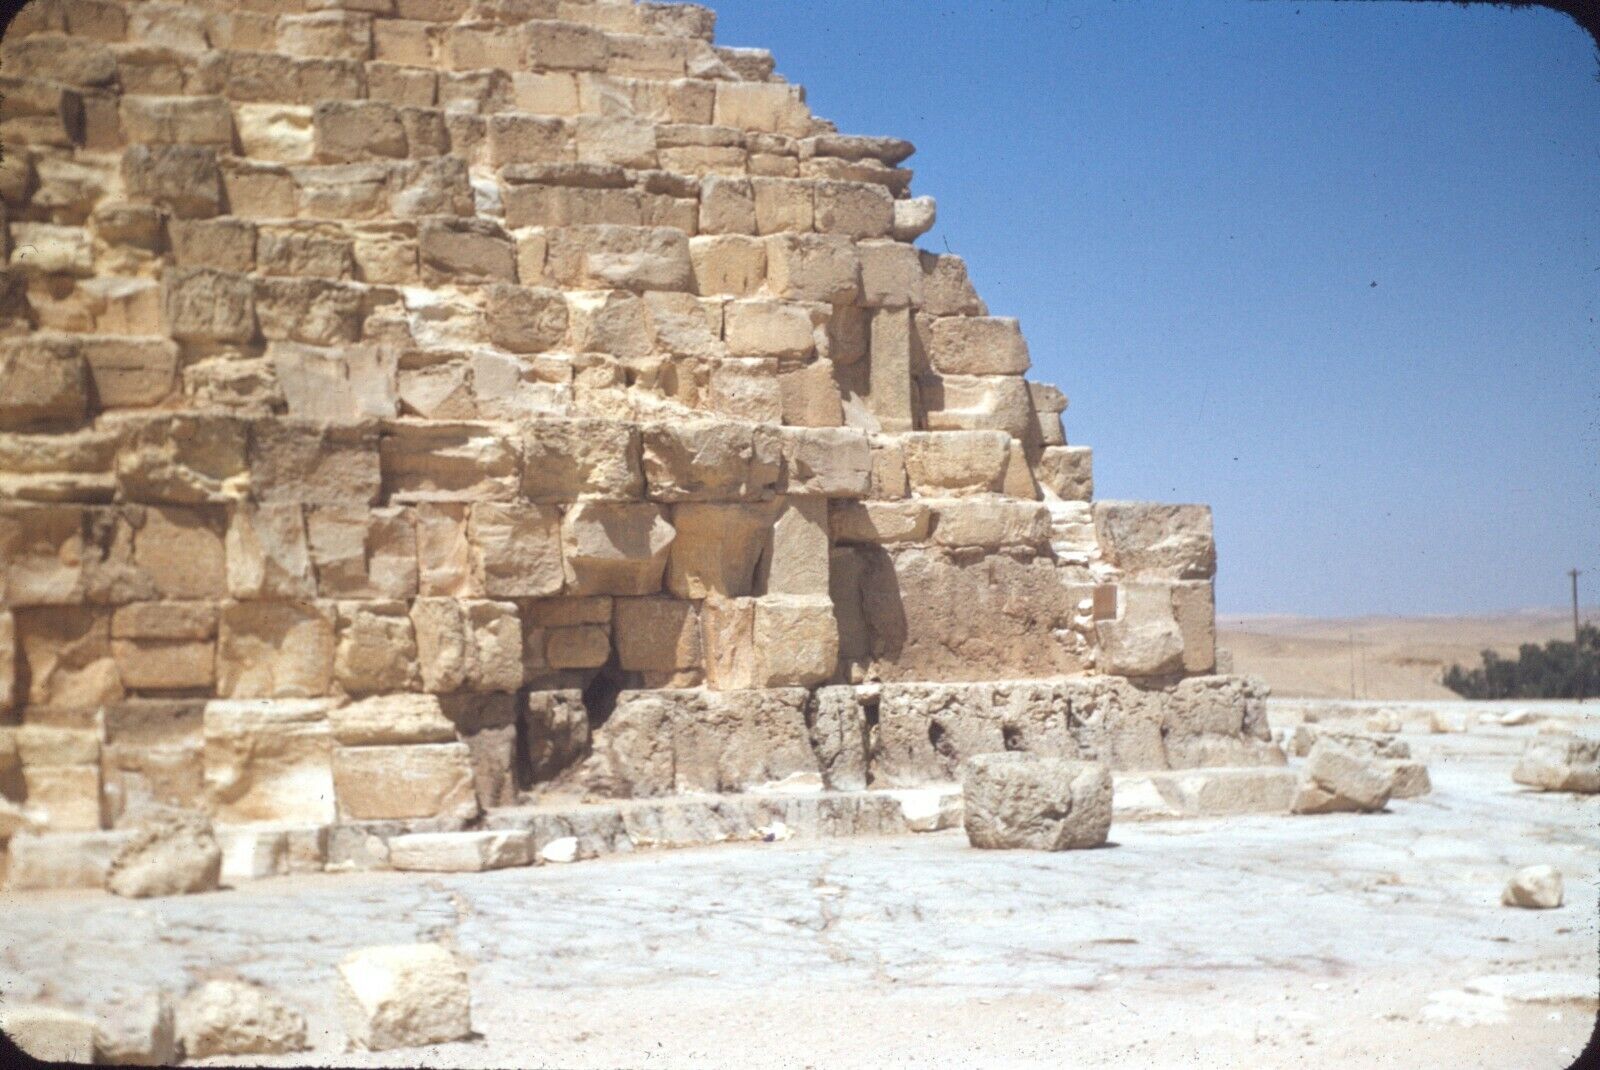 1955 Ancient Cairo Egypt Ruins Pyramid Rocks 1950s Red Border Kodachrome Slide